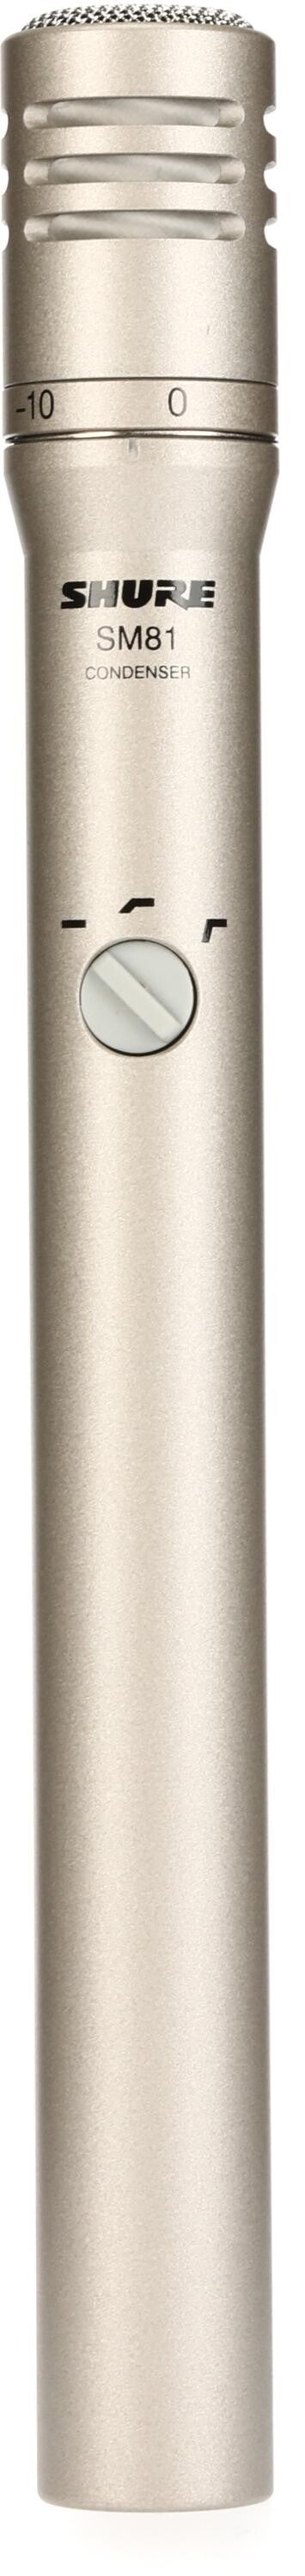 Bundled Item: Shure SM81 Small-diaphragm Condenser Microphone